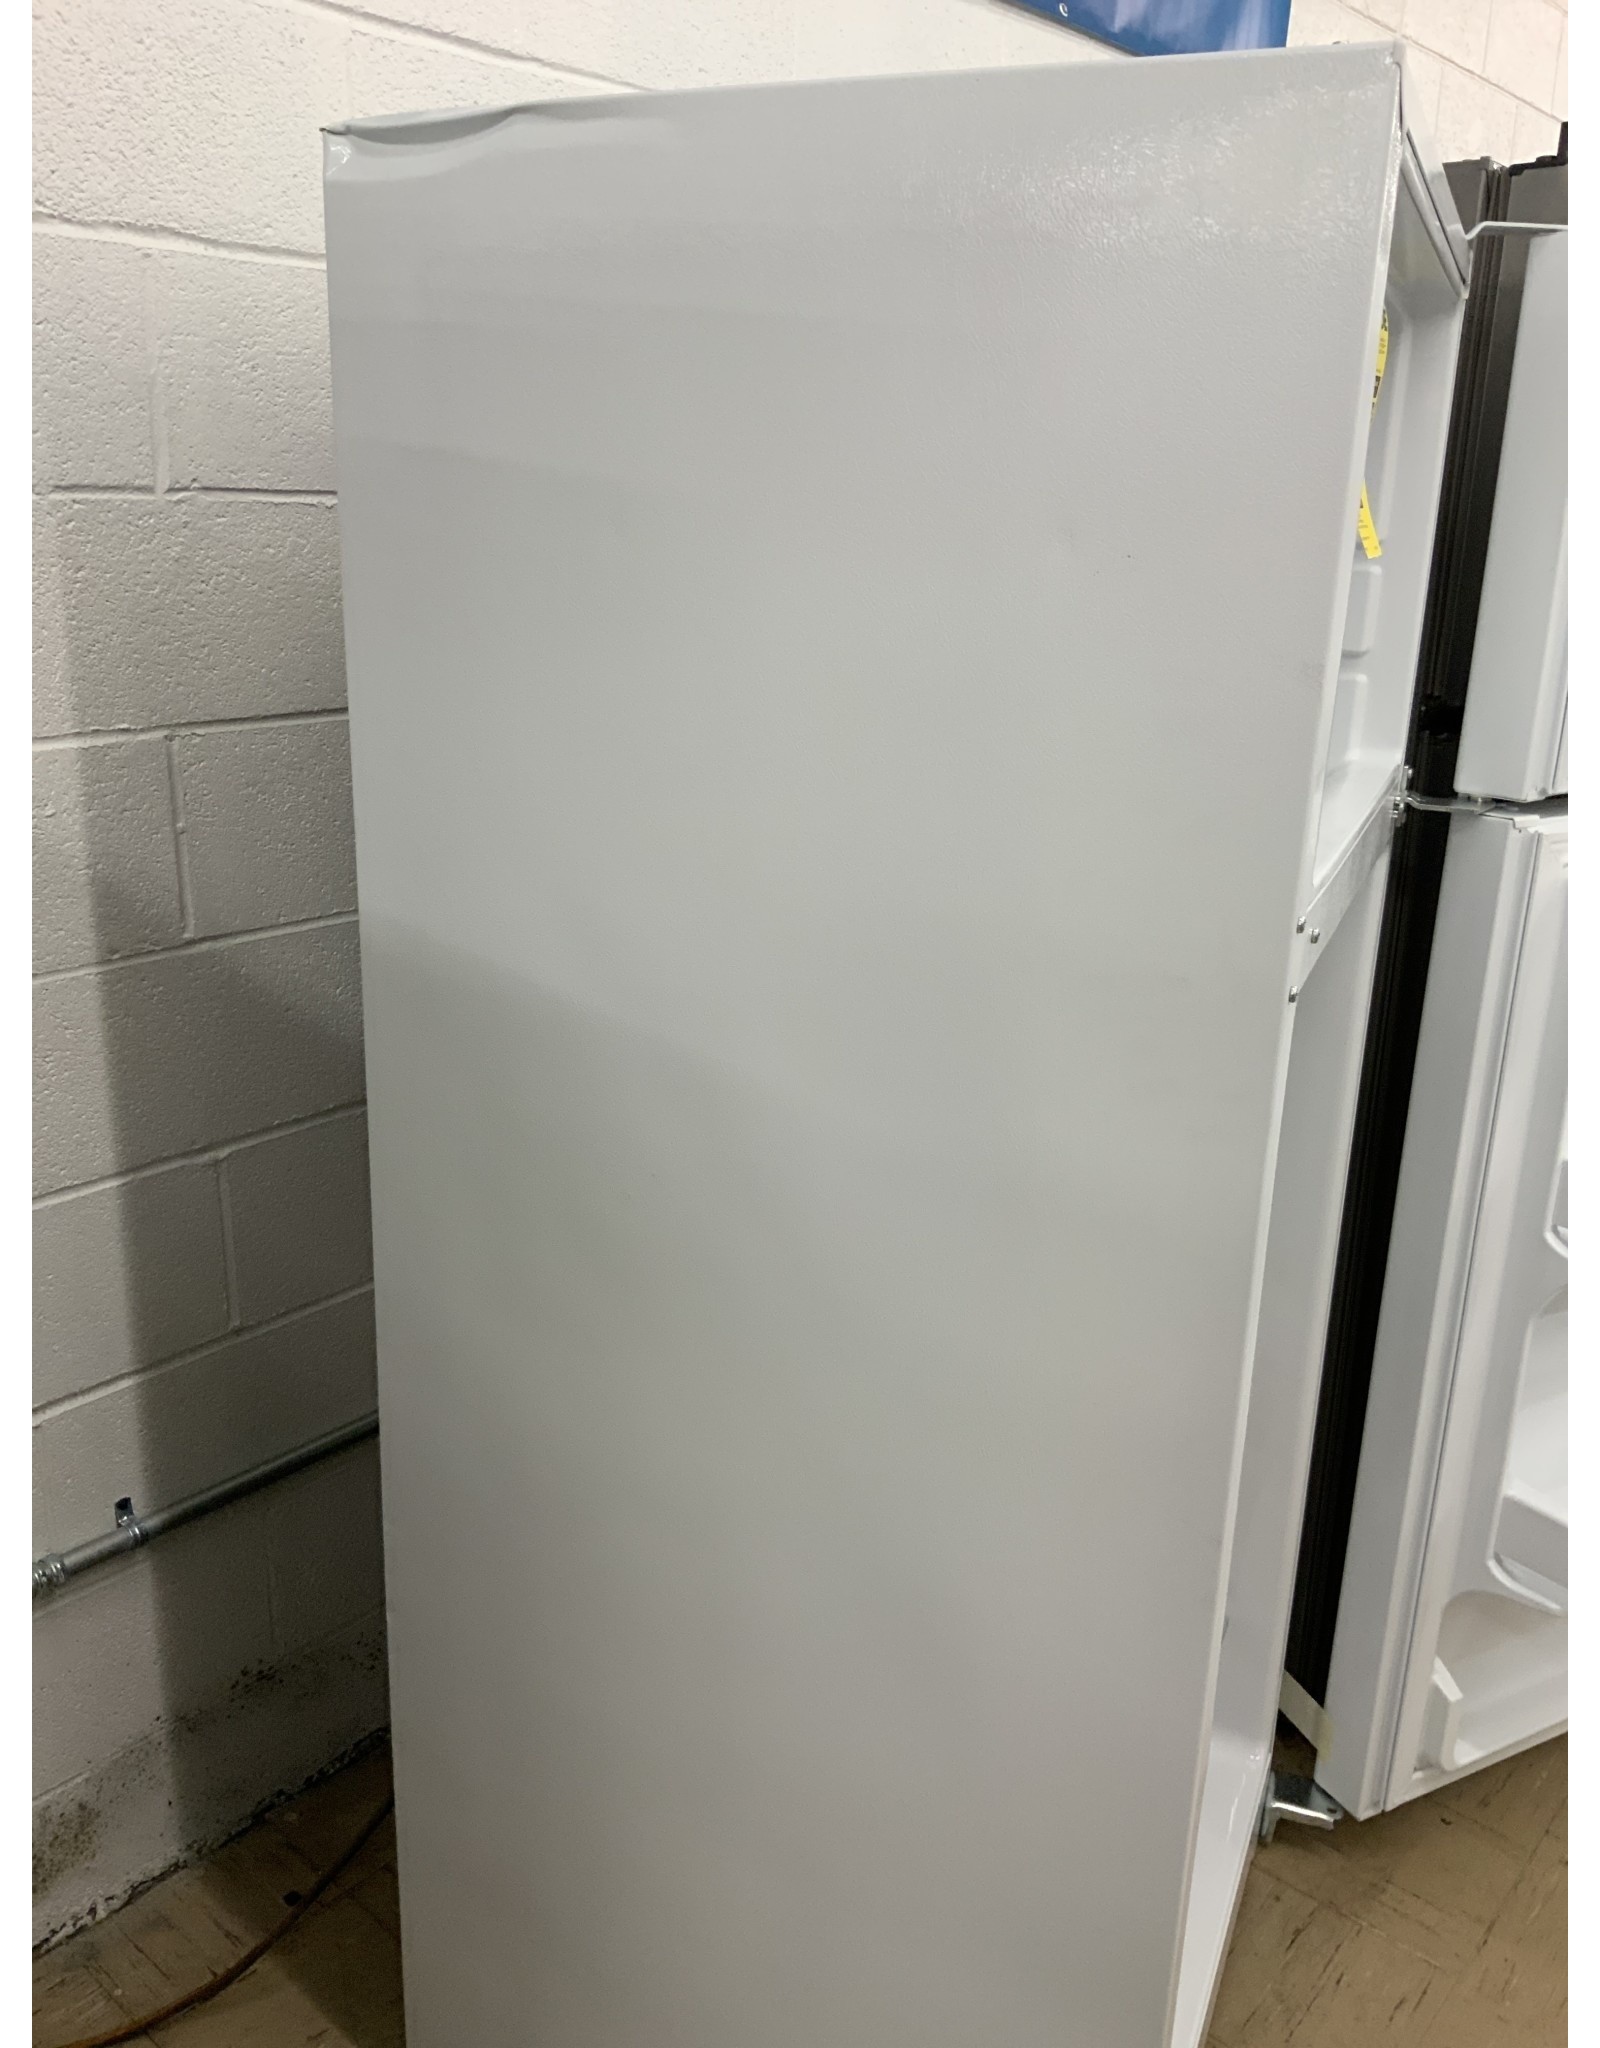 GTS17DTNRWW 16.6 cu. ft. Top Freezer Refrigerator in White - Black Friday